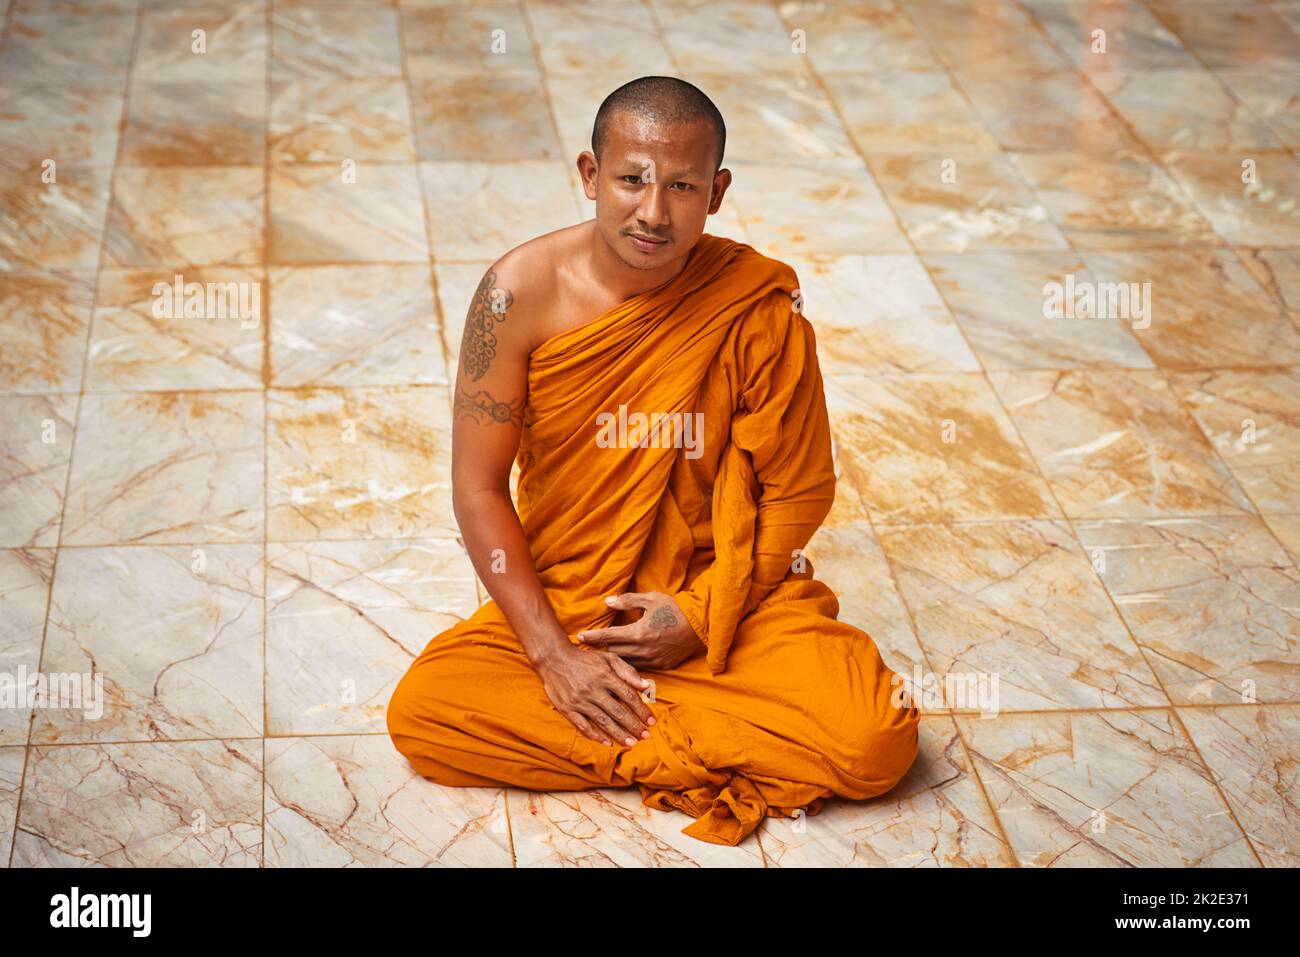 Sitting in quiet meditation. Portrait of a buddhist monk sitting on a monastary floor. Stock Photo